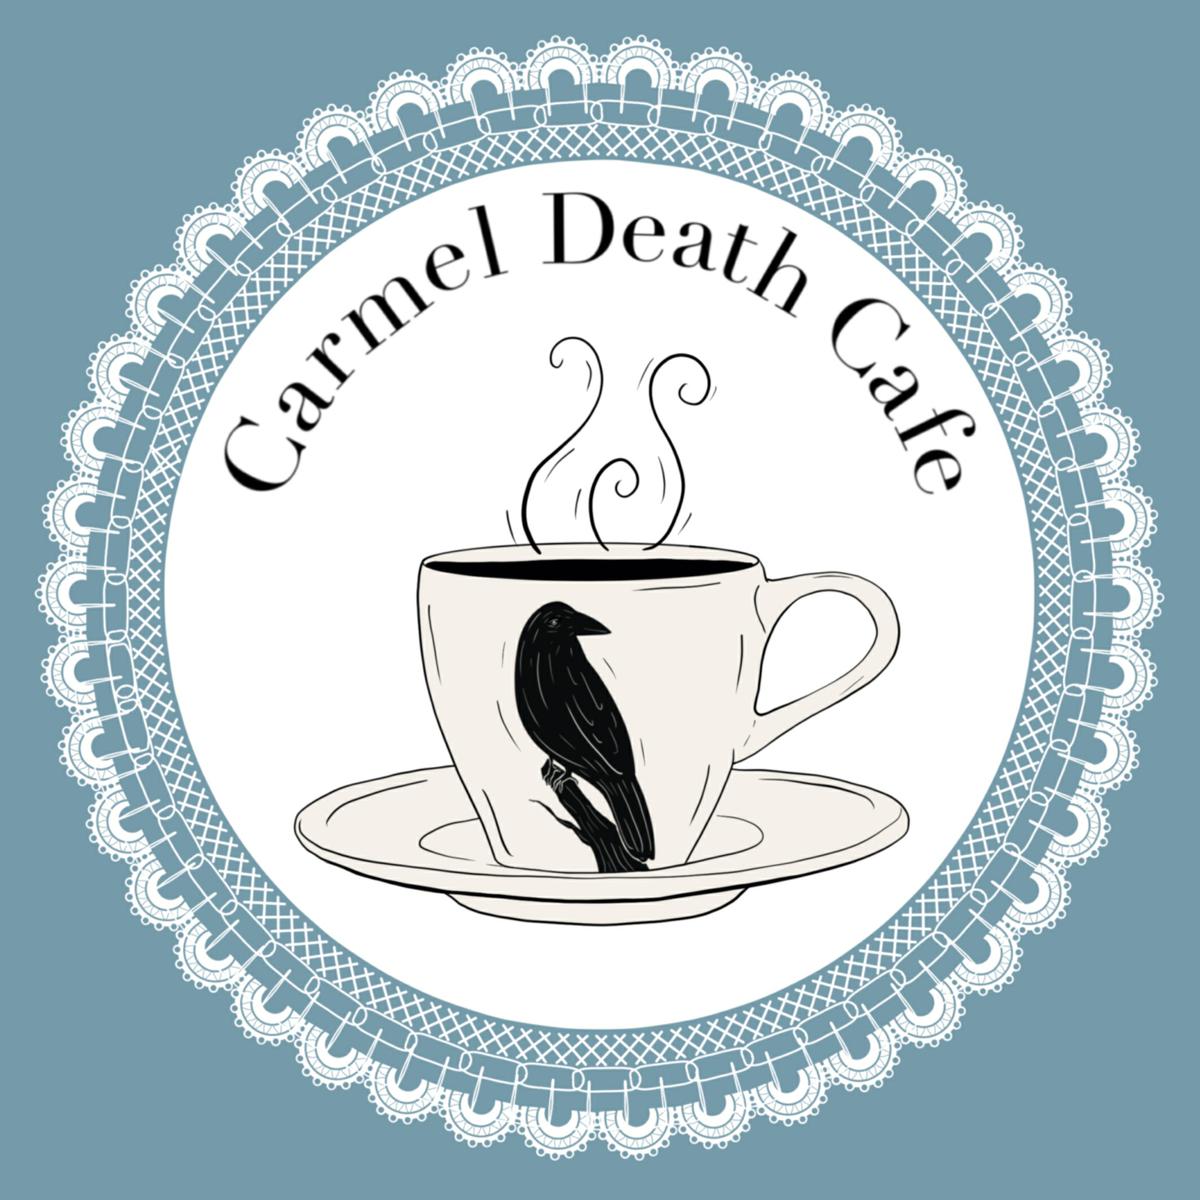 Carmel IN Death Cafe